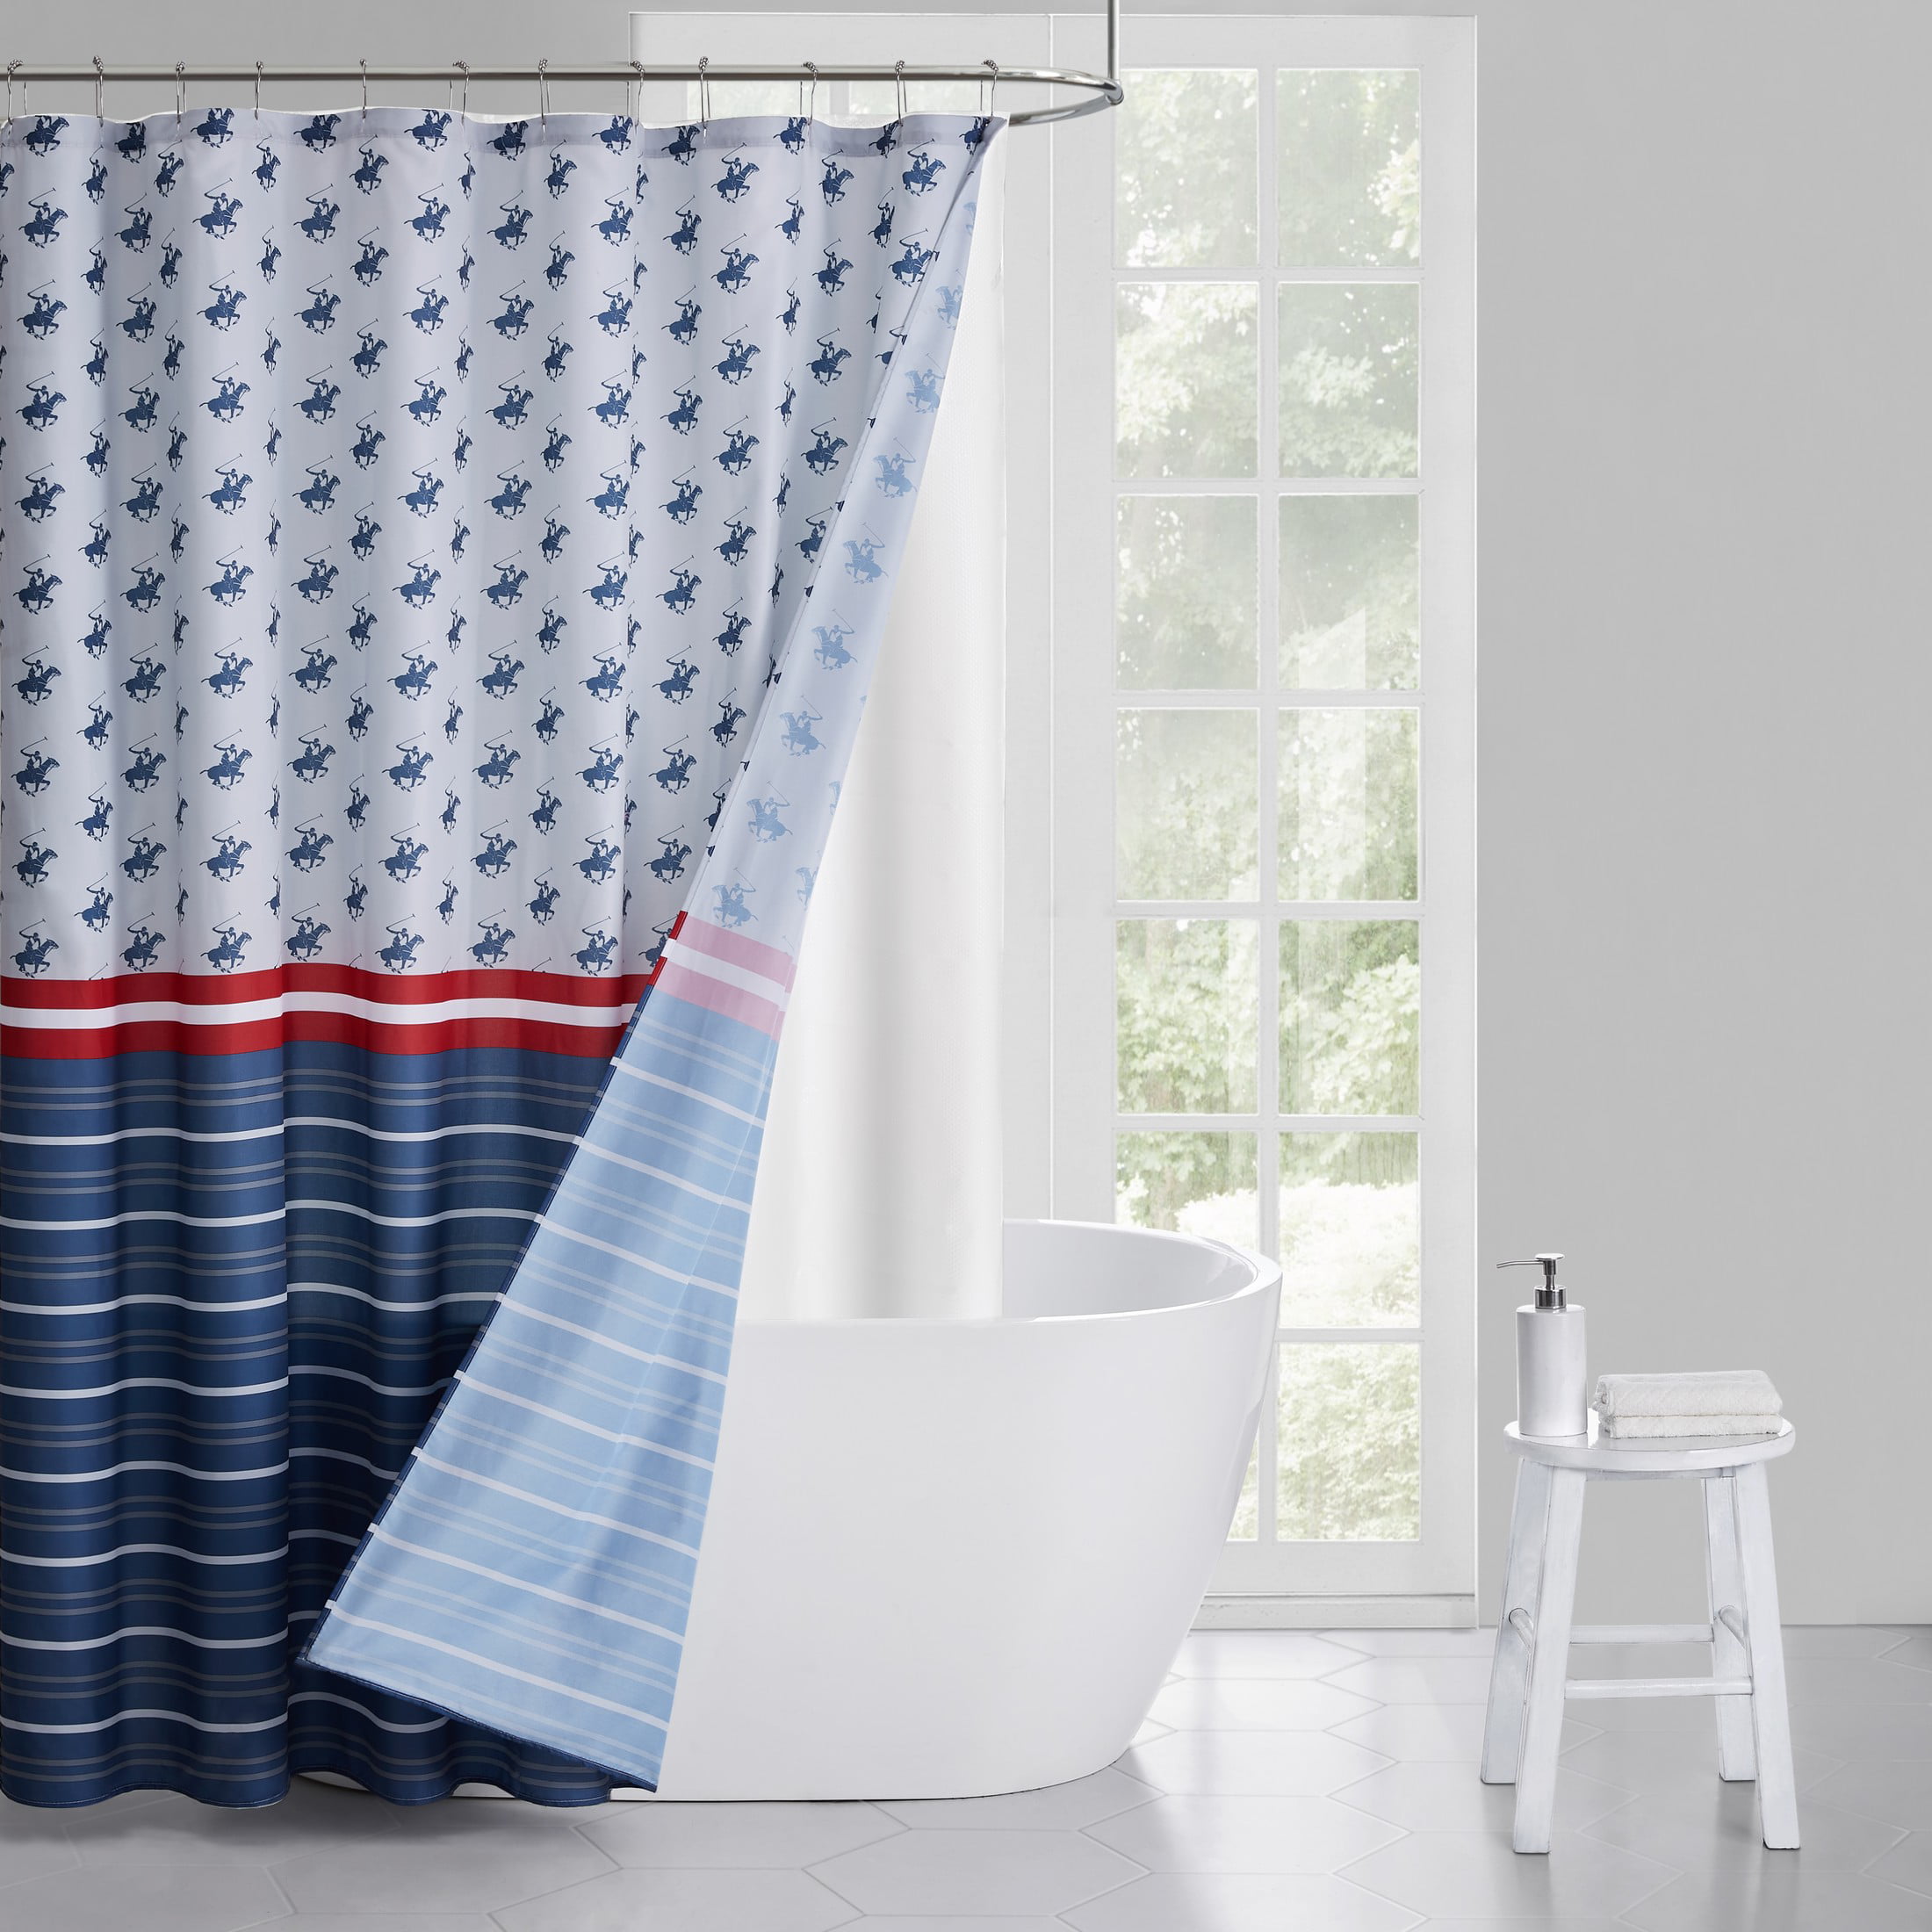 Hockey Puck Bathroom Waterproof Fabric Shower Curtain Liner Bath Doormat Set 71" 